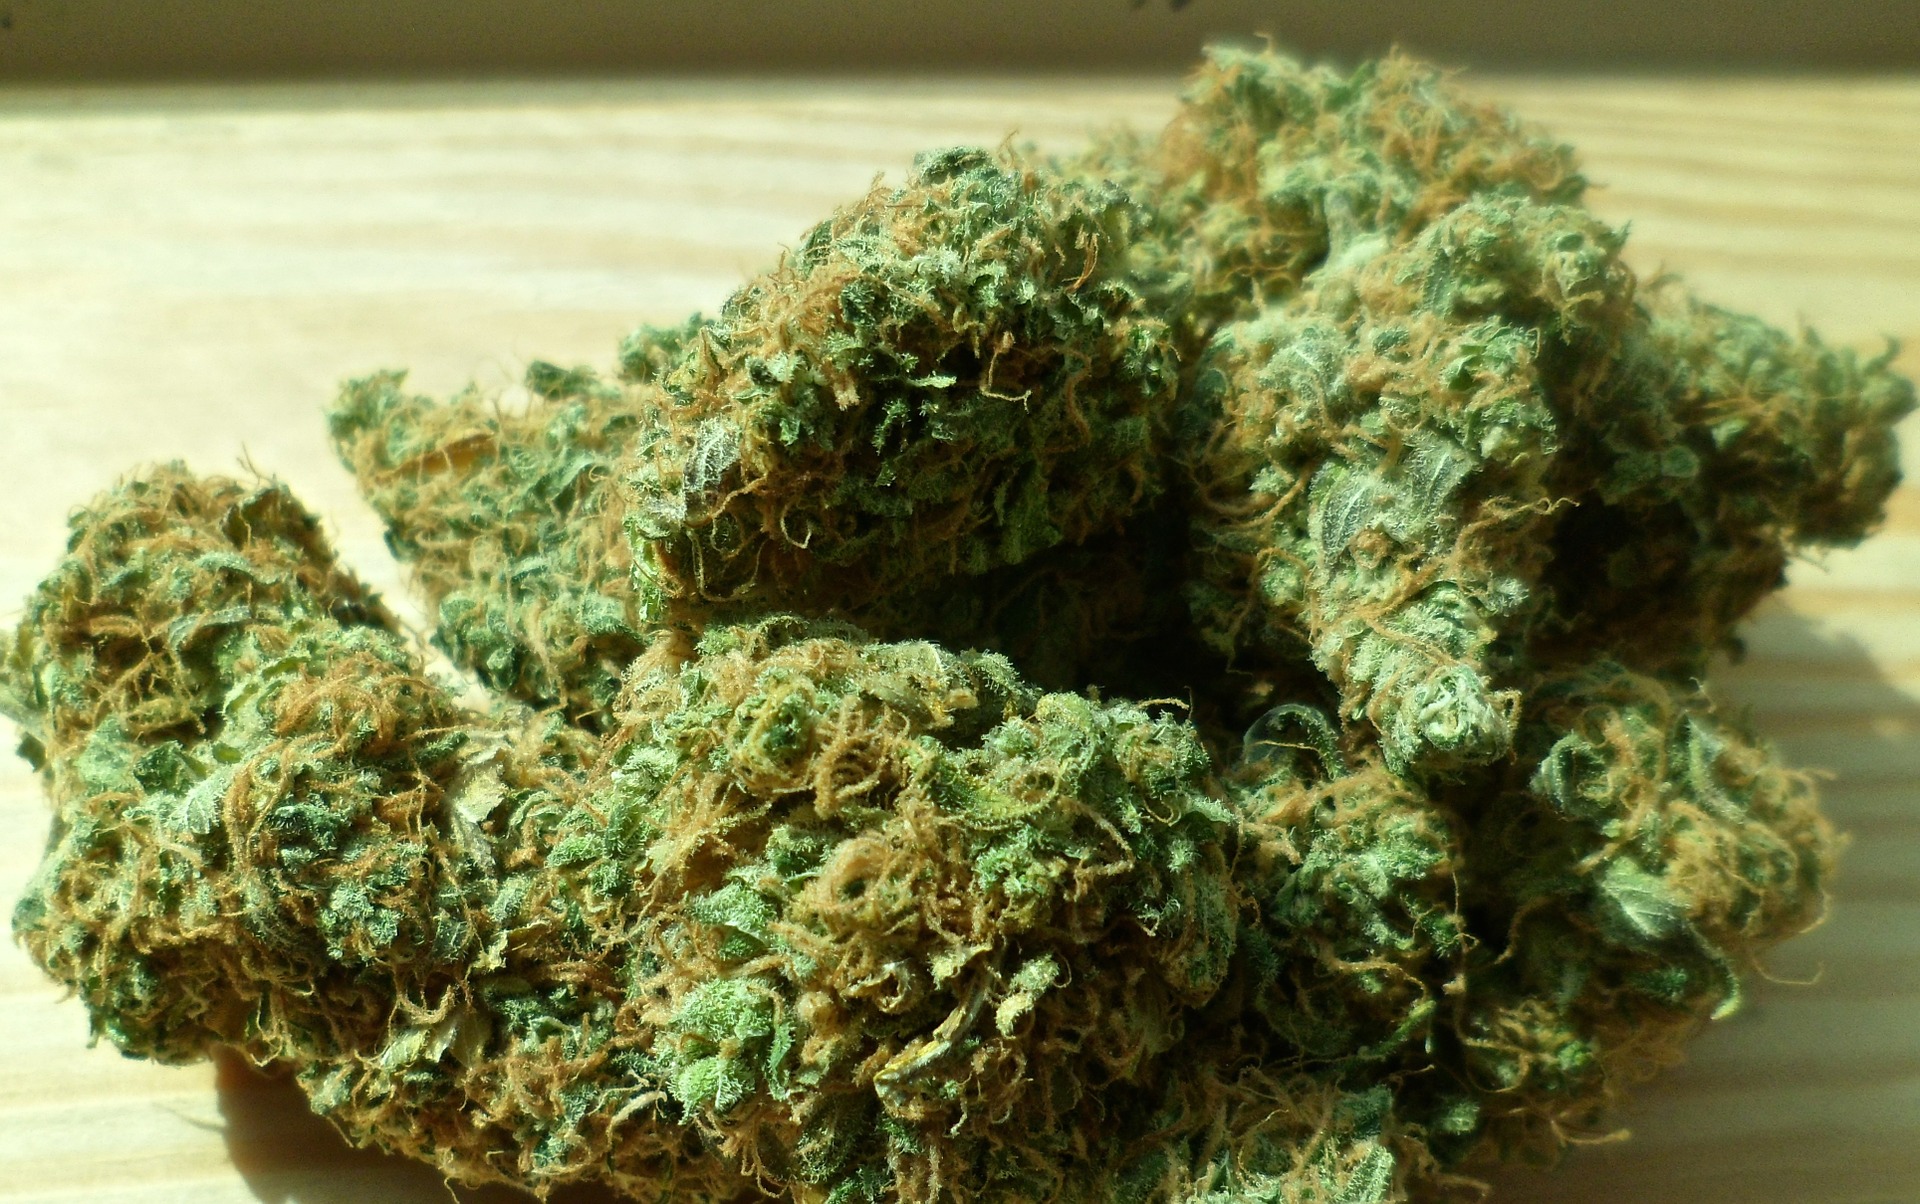 Drugs swoops in East Renfrewshire as Barrhead man found with cannabis in car - Barrhead News